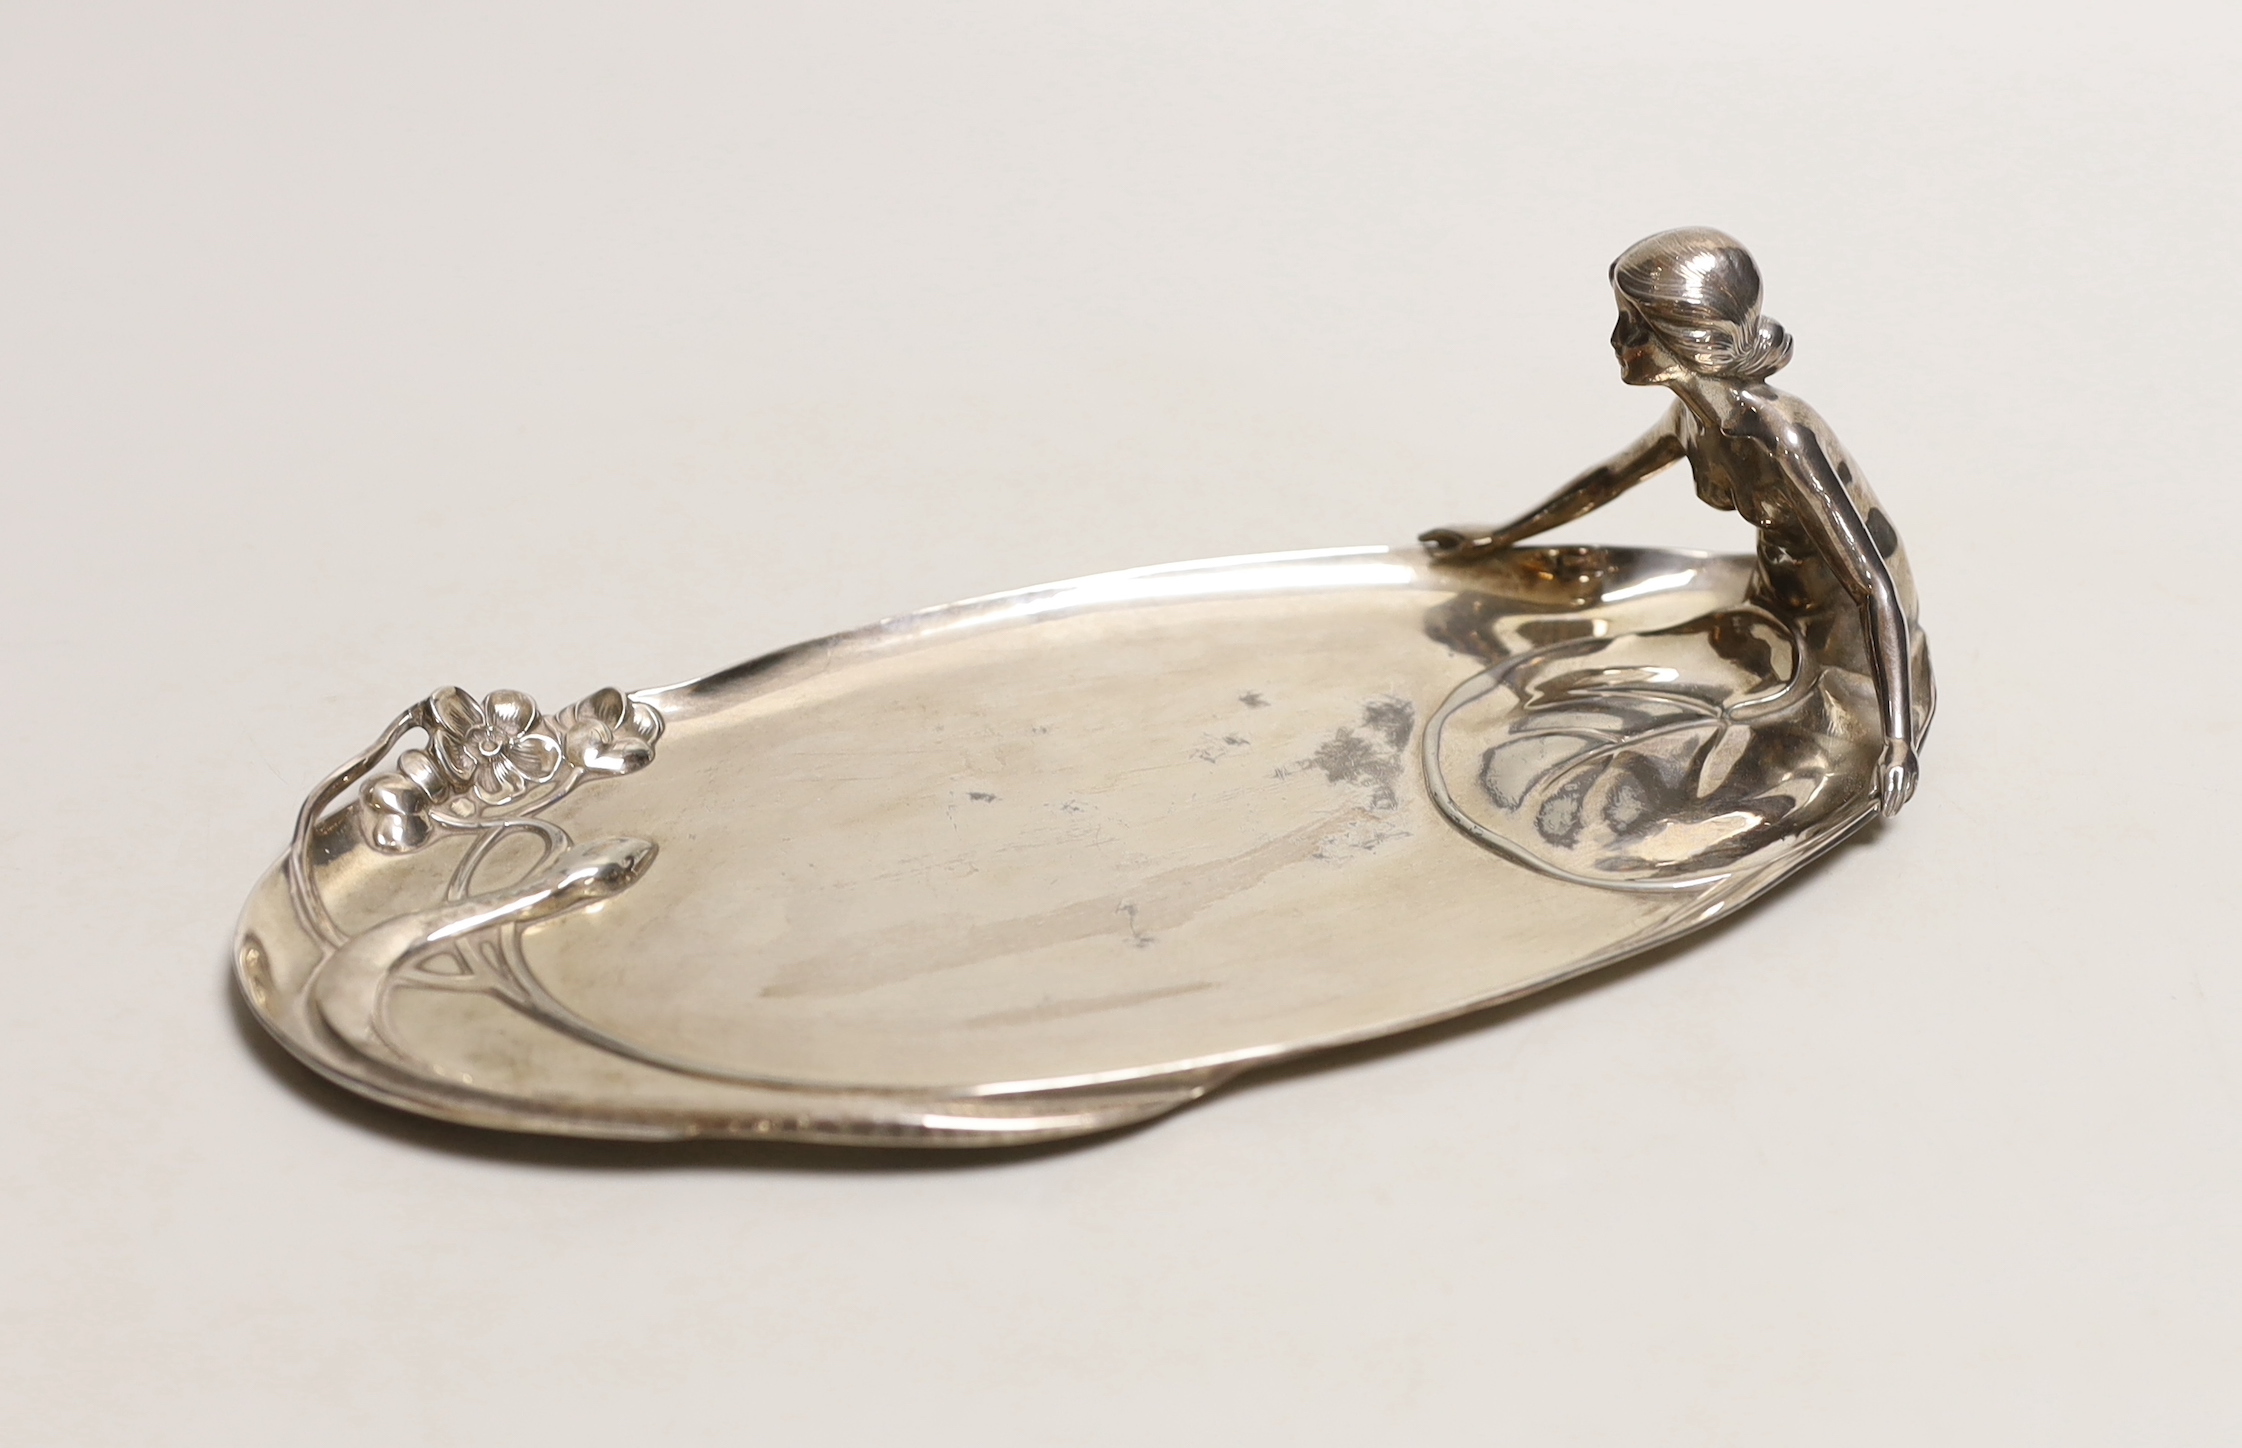 An Art Nouveau WMF (Wurttemburgerische Metallwarenfabrik) polished pewter figural tray, 25cm long